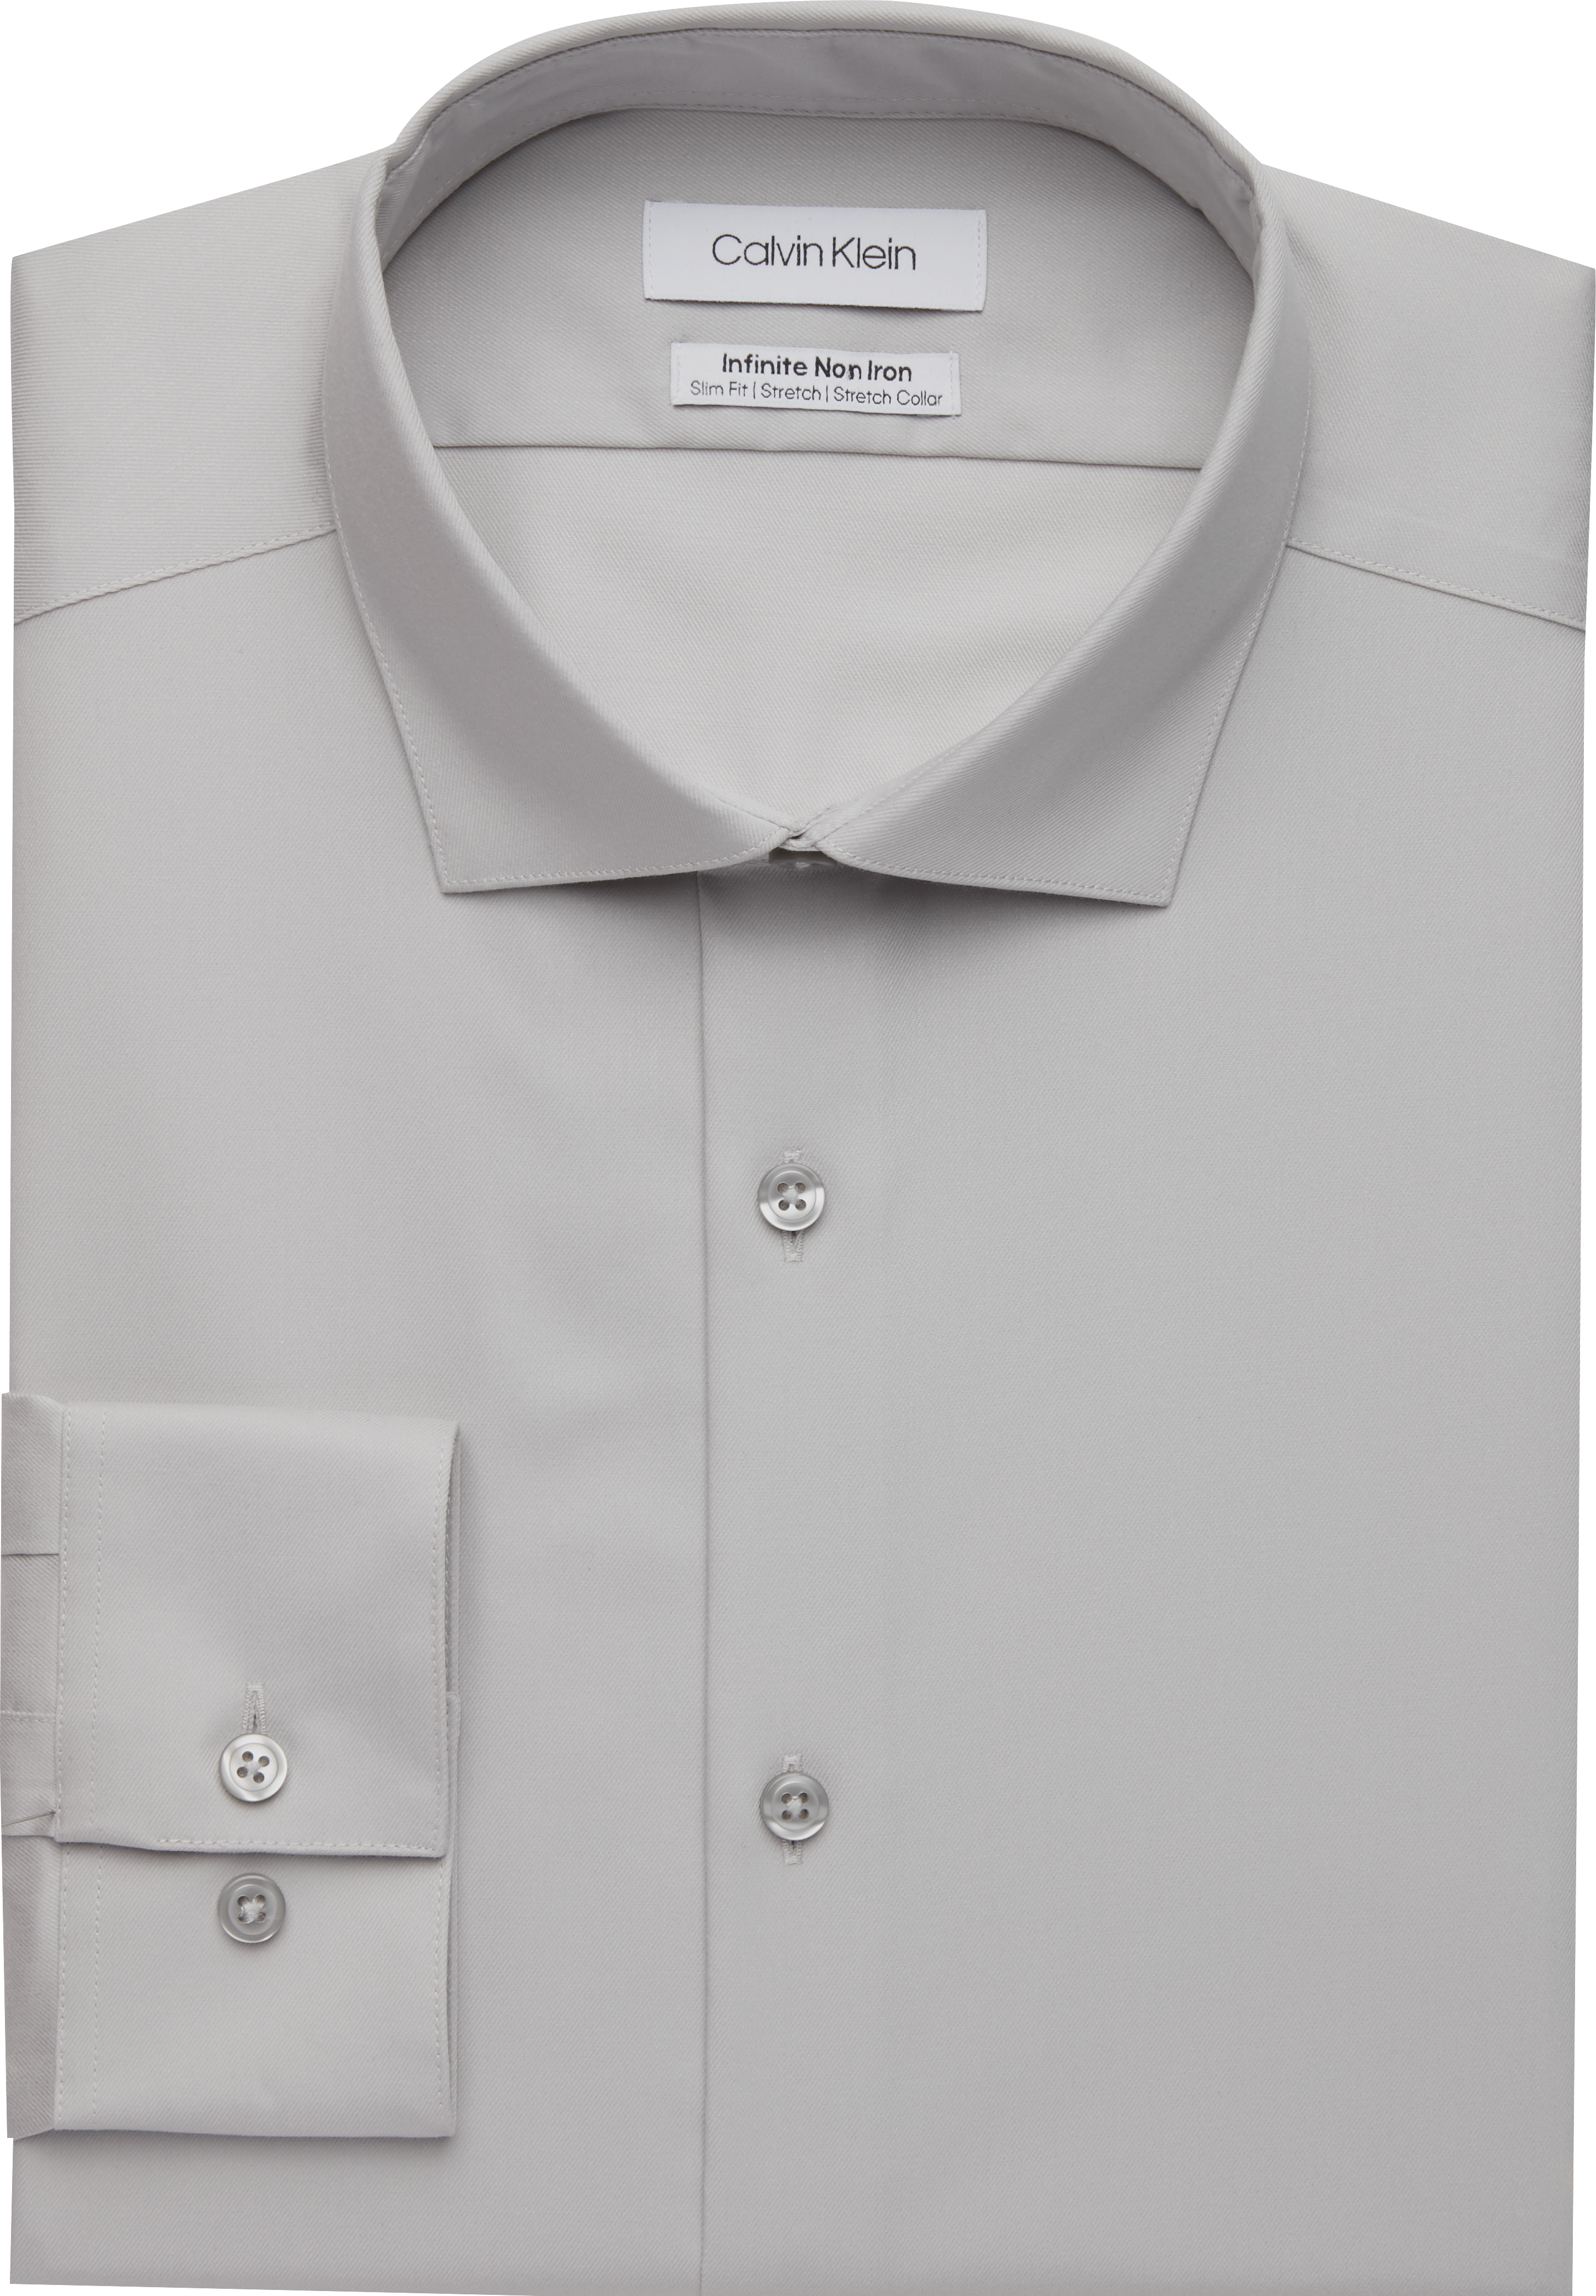 Calvin Klein Infinite Non-Iron Slim Fit Stretch Collar Dress Shirt |  Clearance Dress Shirts| Men's Wearhouse